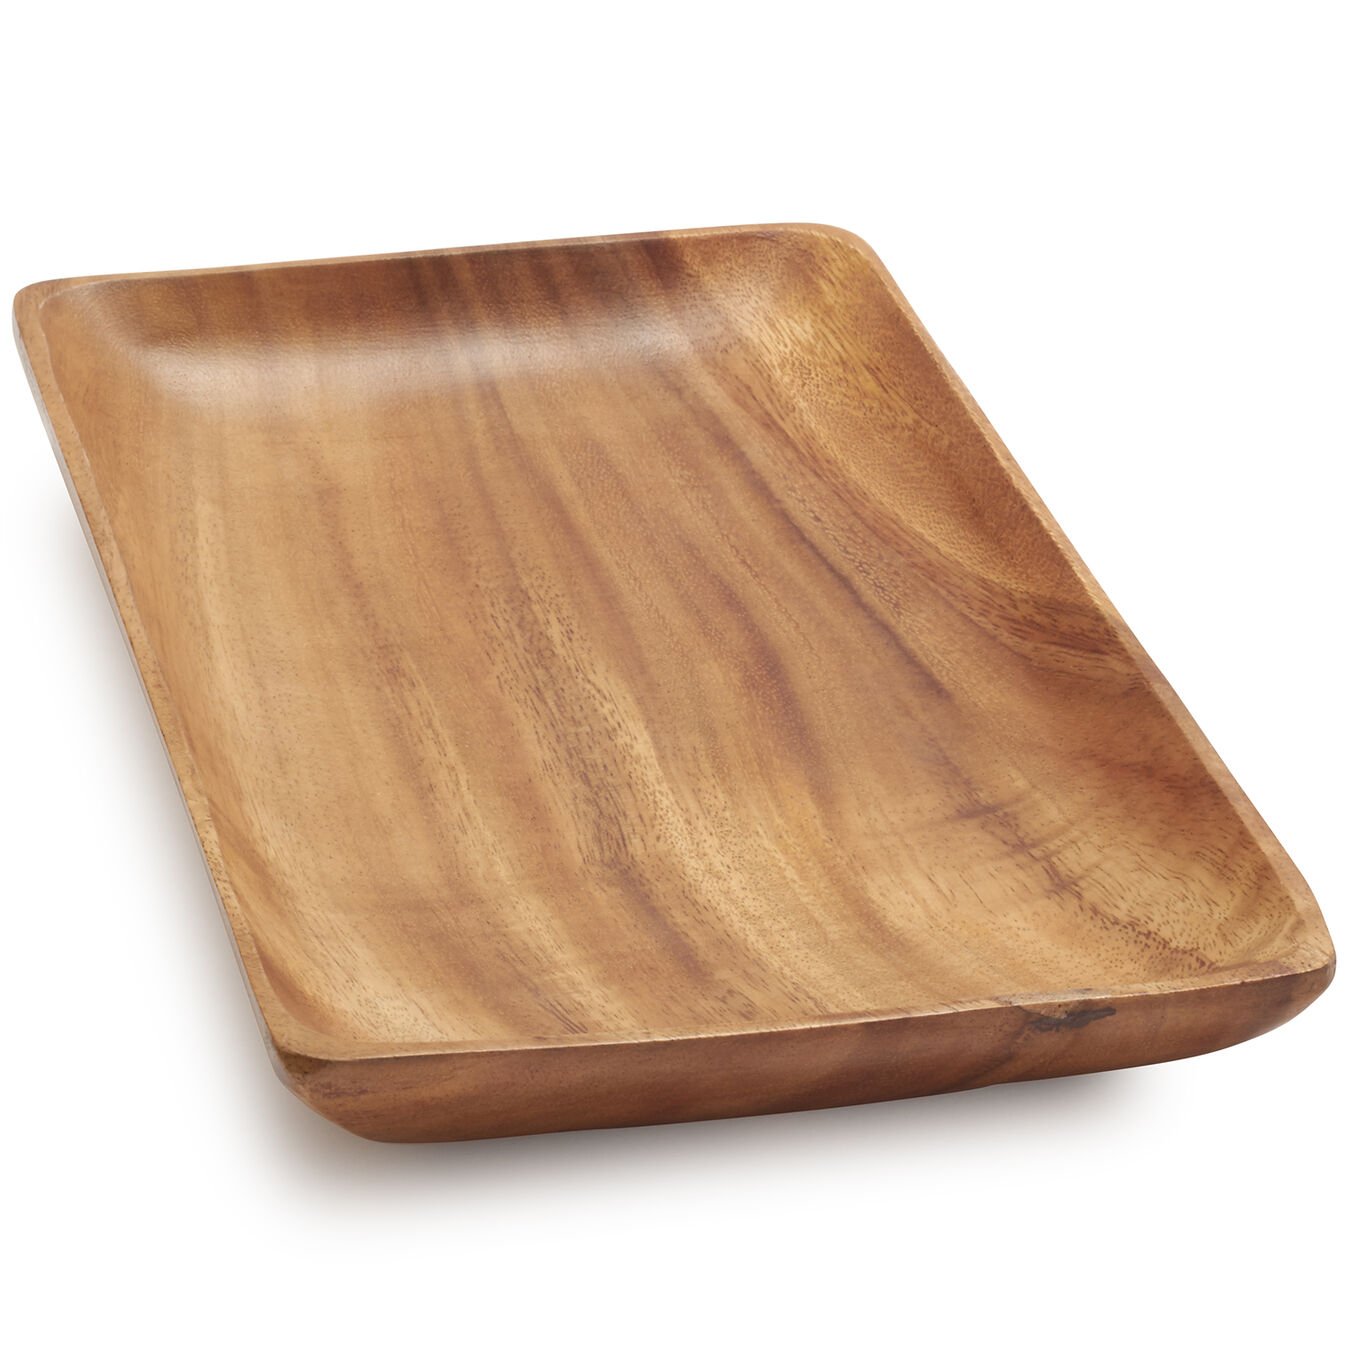 Acacia Wood Serving Tray Platter by Ib Laursen 20 cm